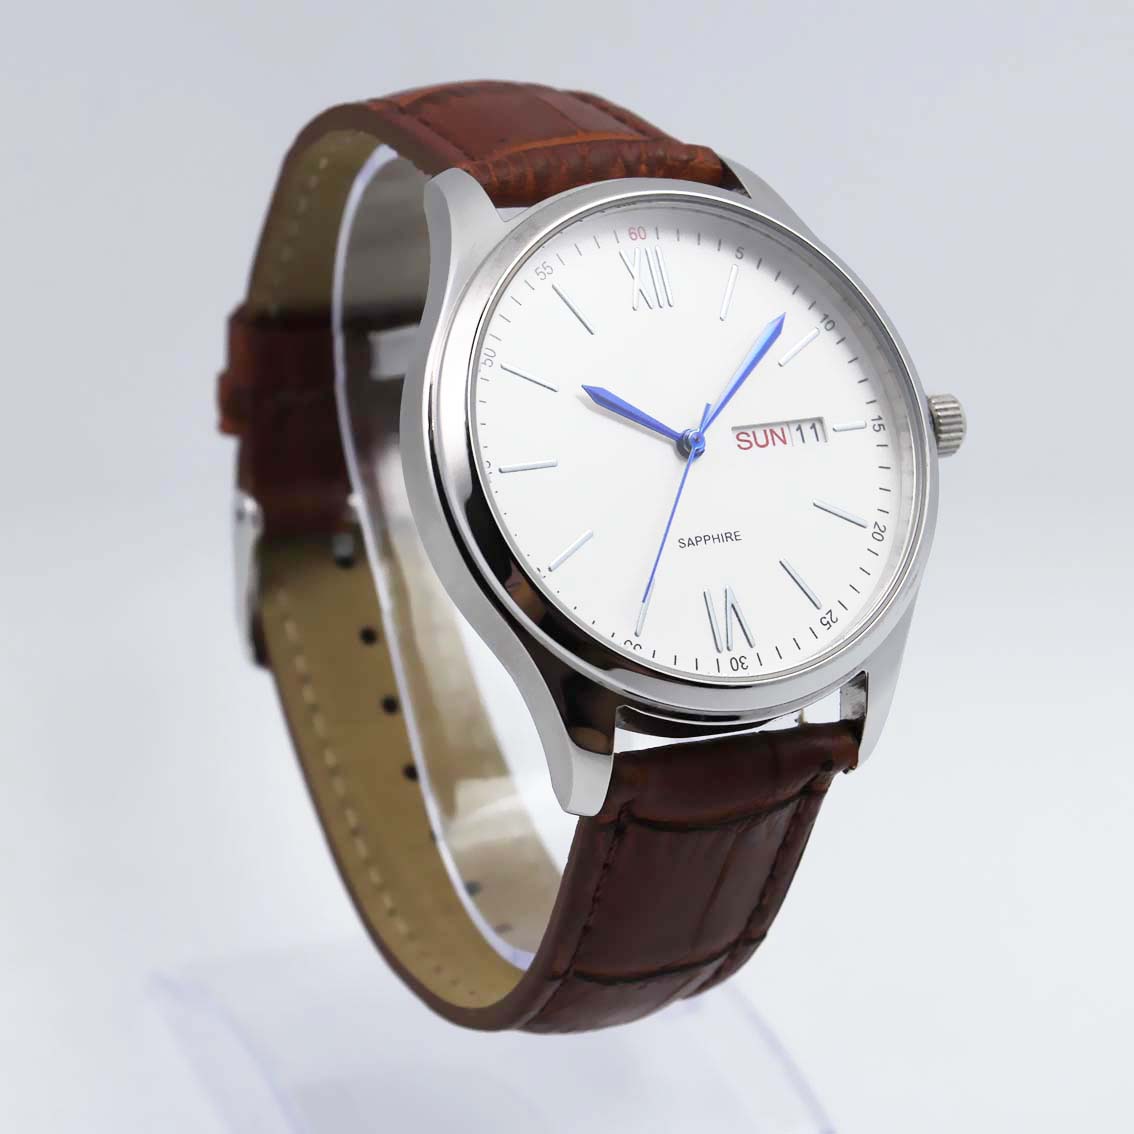 #02083Men's wristwatch quartz analog leather strap watch